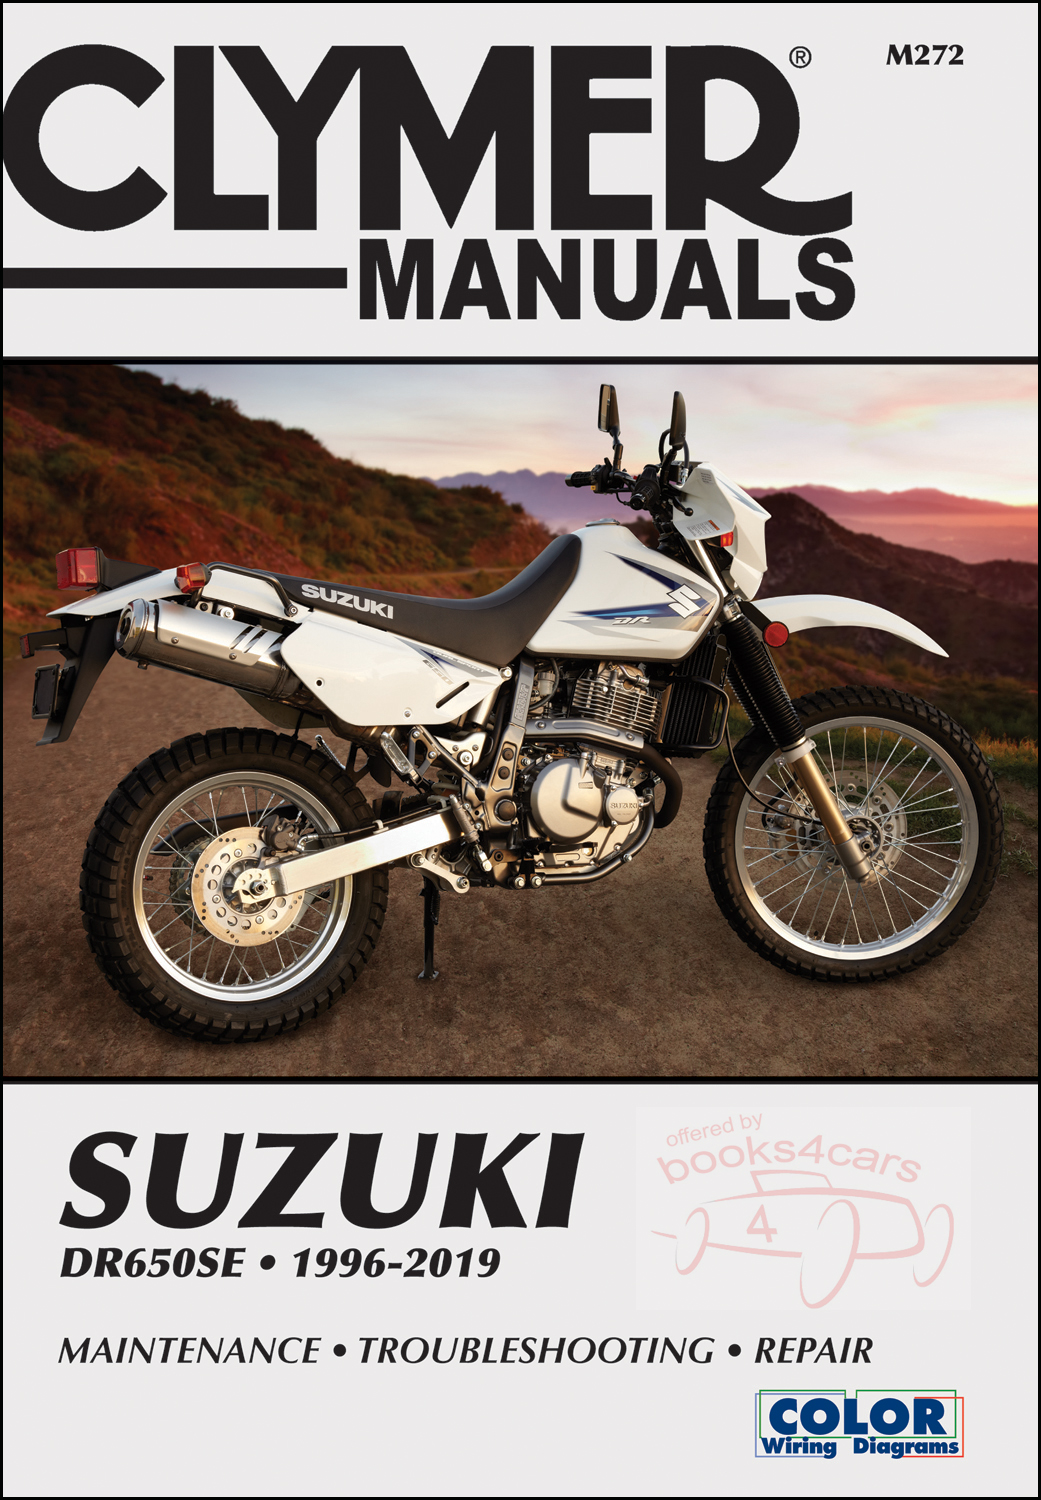 1996-2019 Suzuki DR650SE Shop Service Repair Manual by Clymer